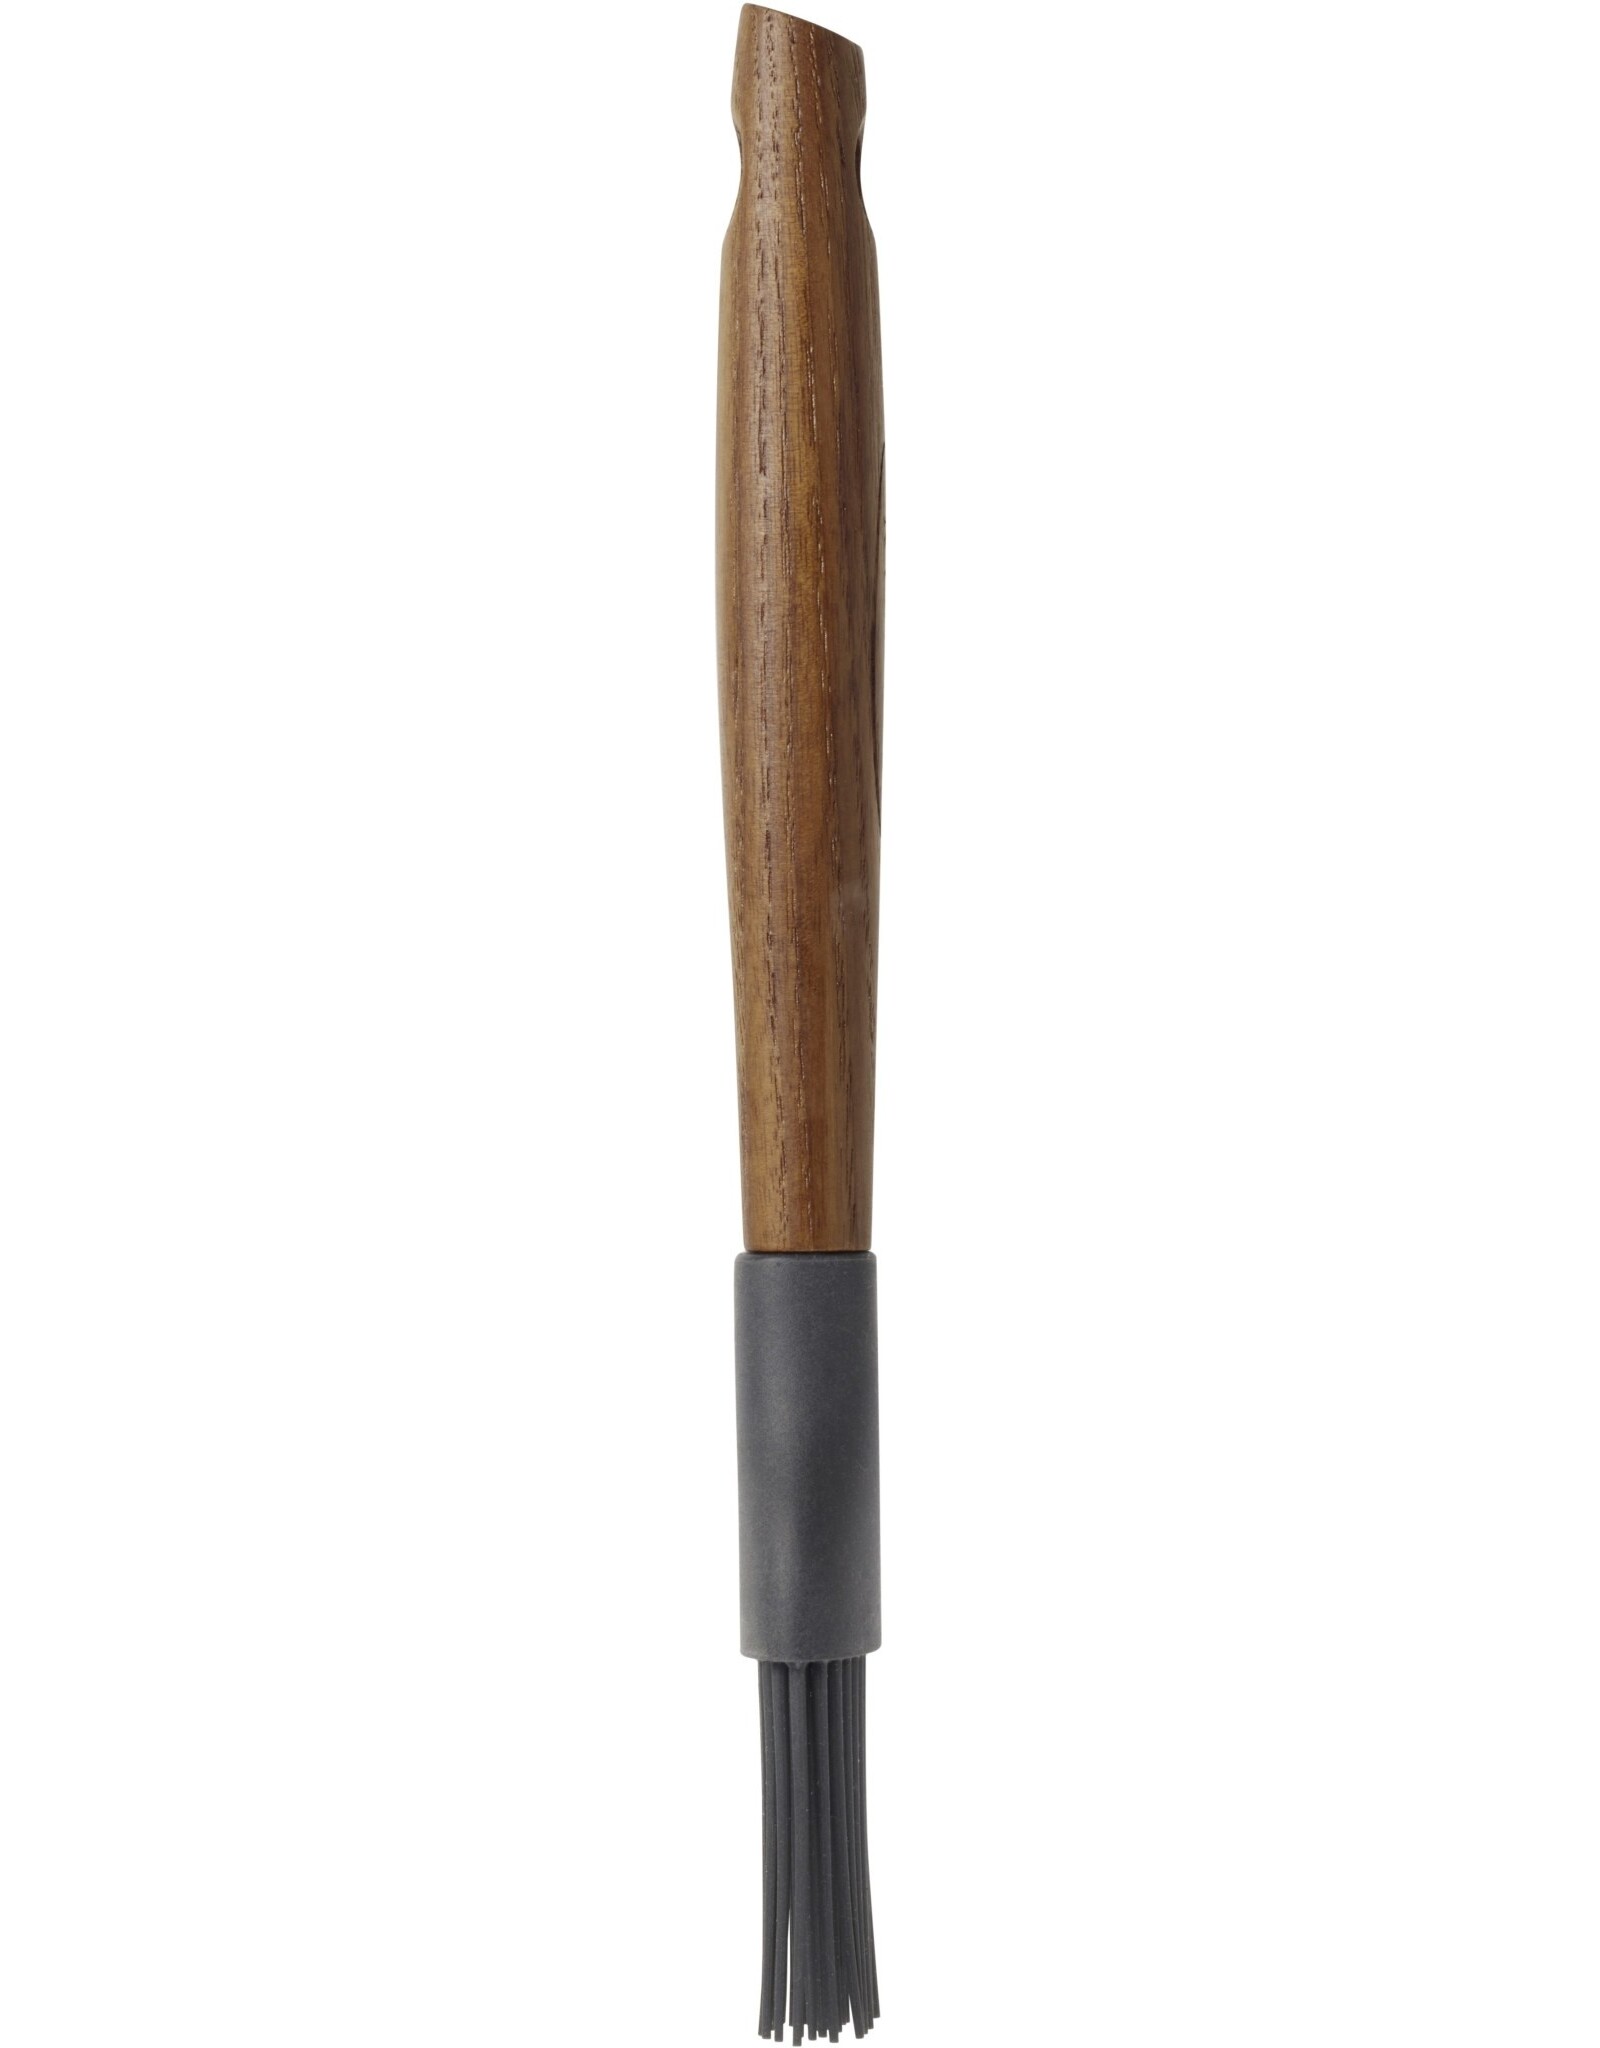 Scanpan Bakkwast 22 cm  – Carbonized Ash